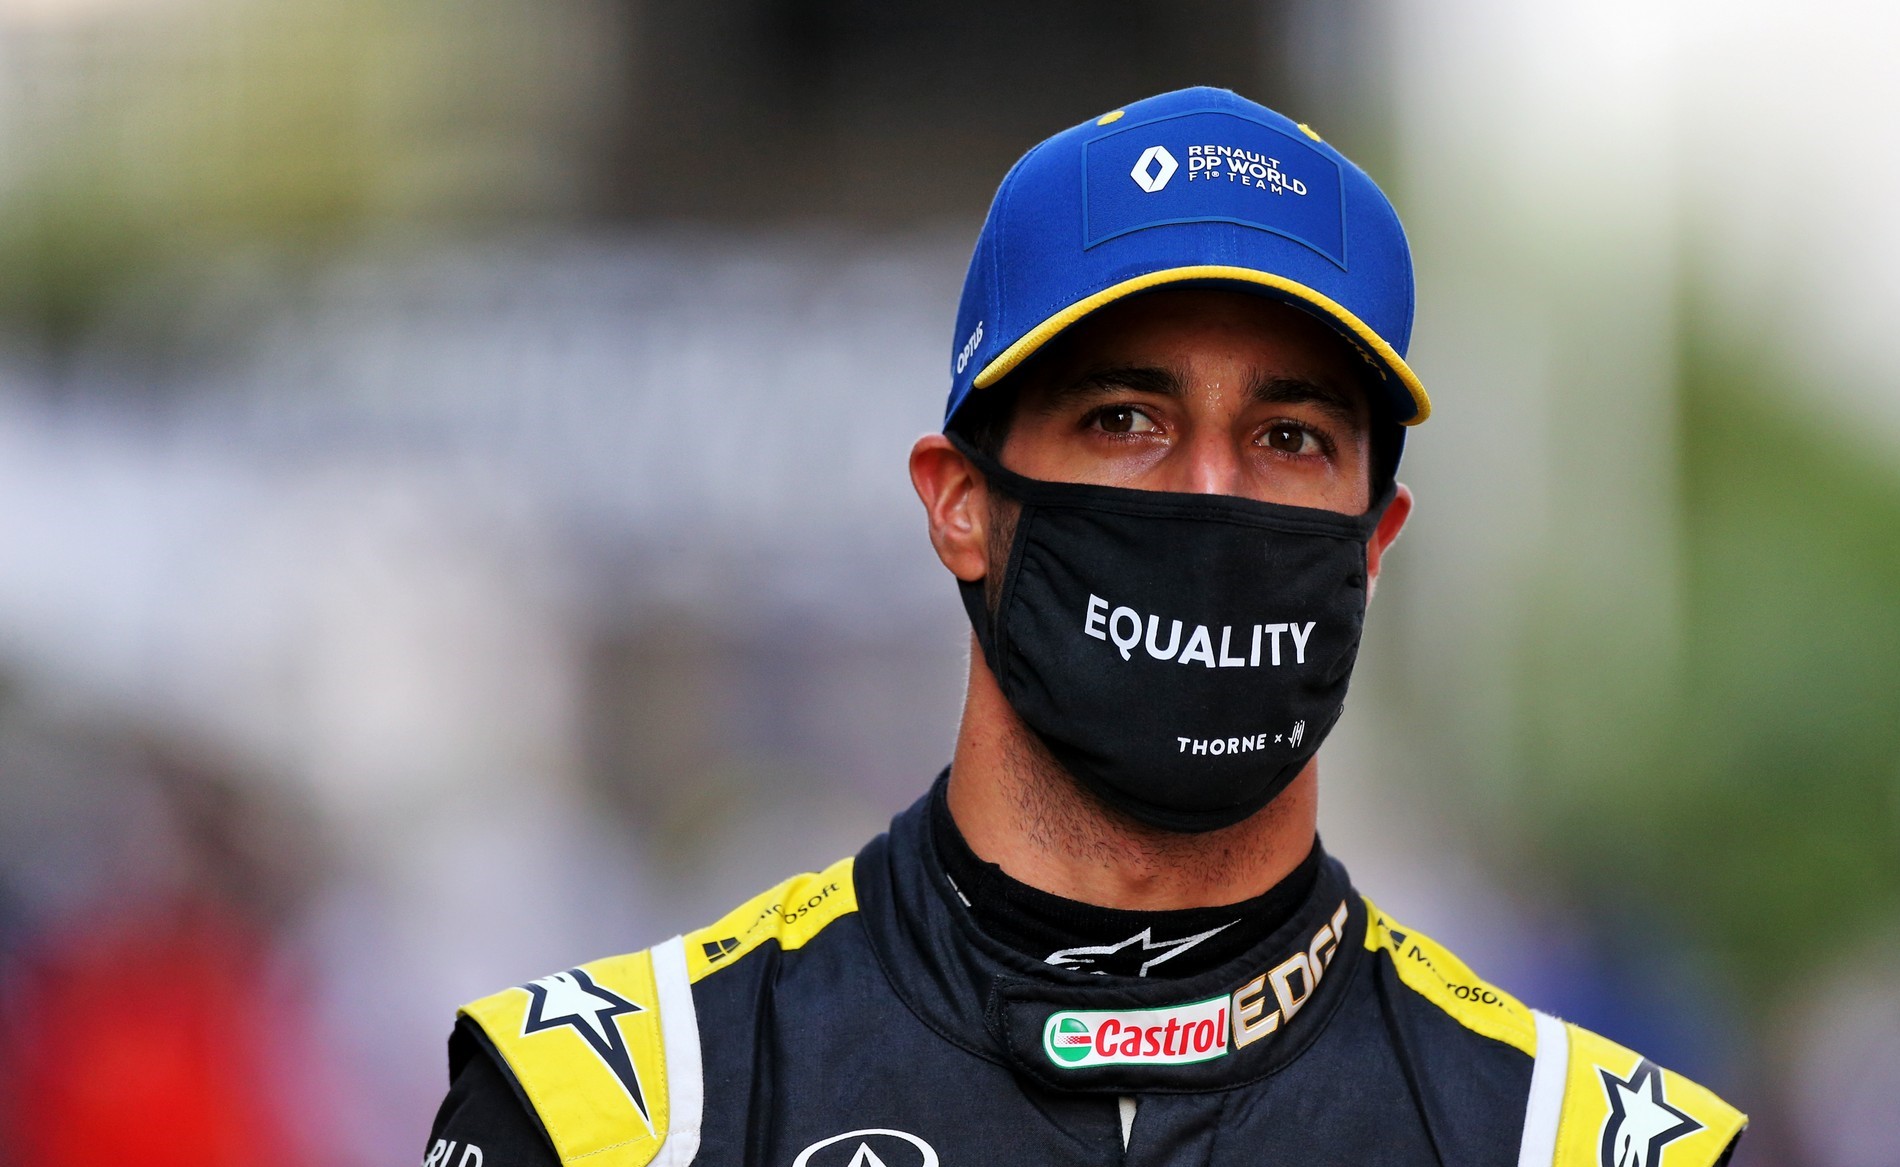 Daniel Ricciardo on anti-racism,'Silence worse than criticism'